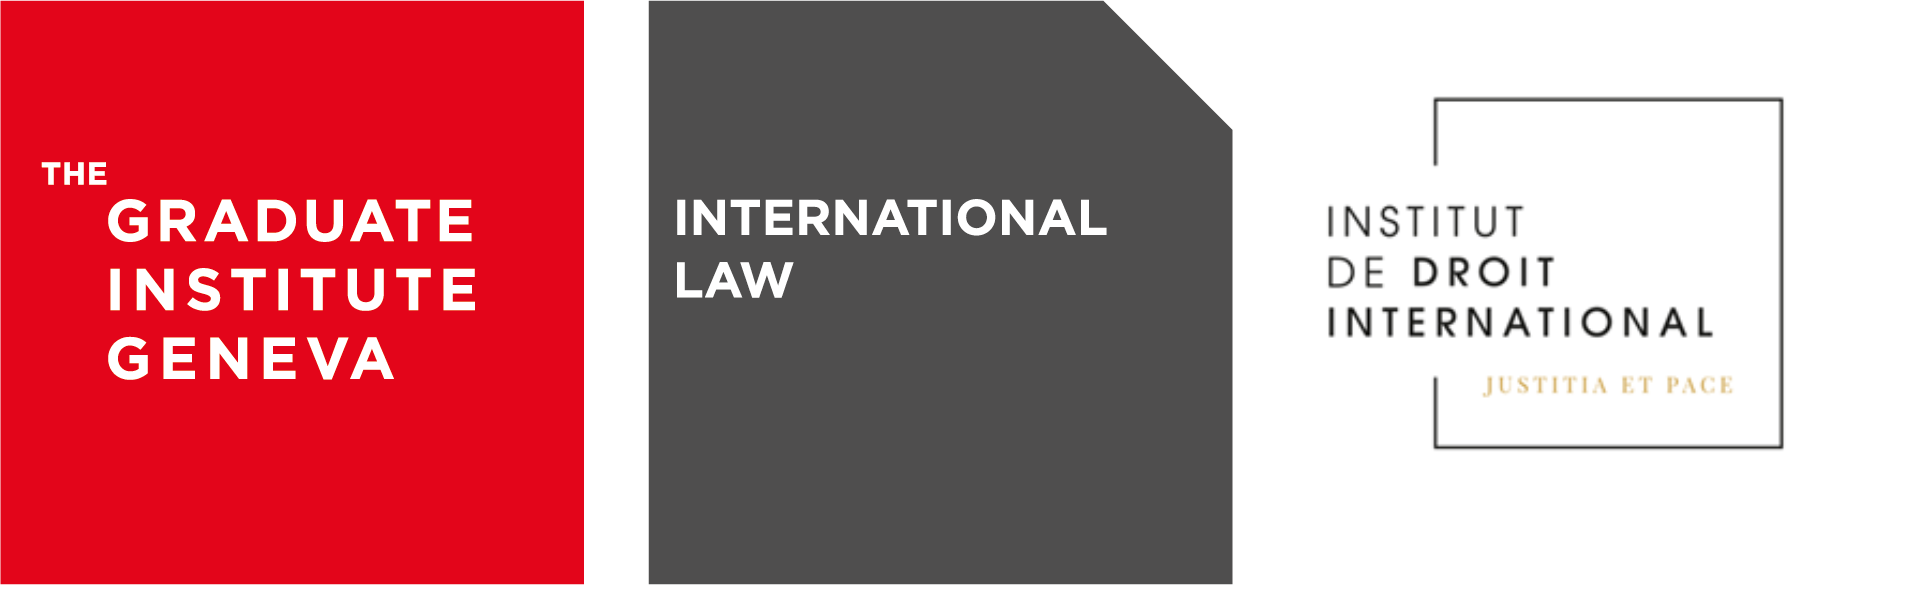 logos intl law IDI